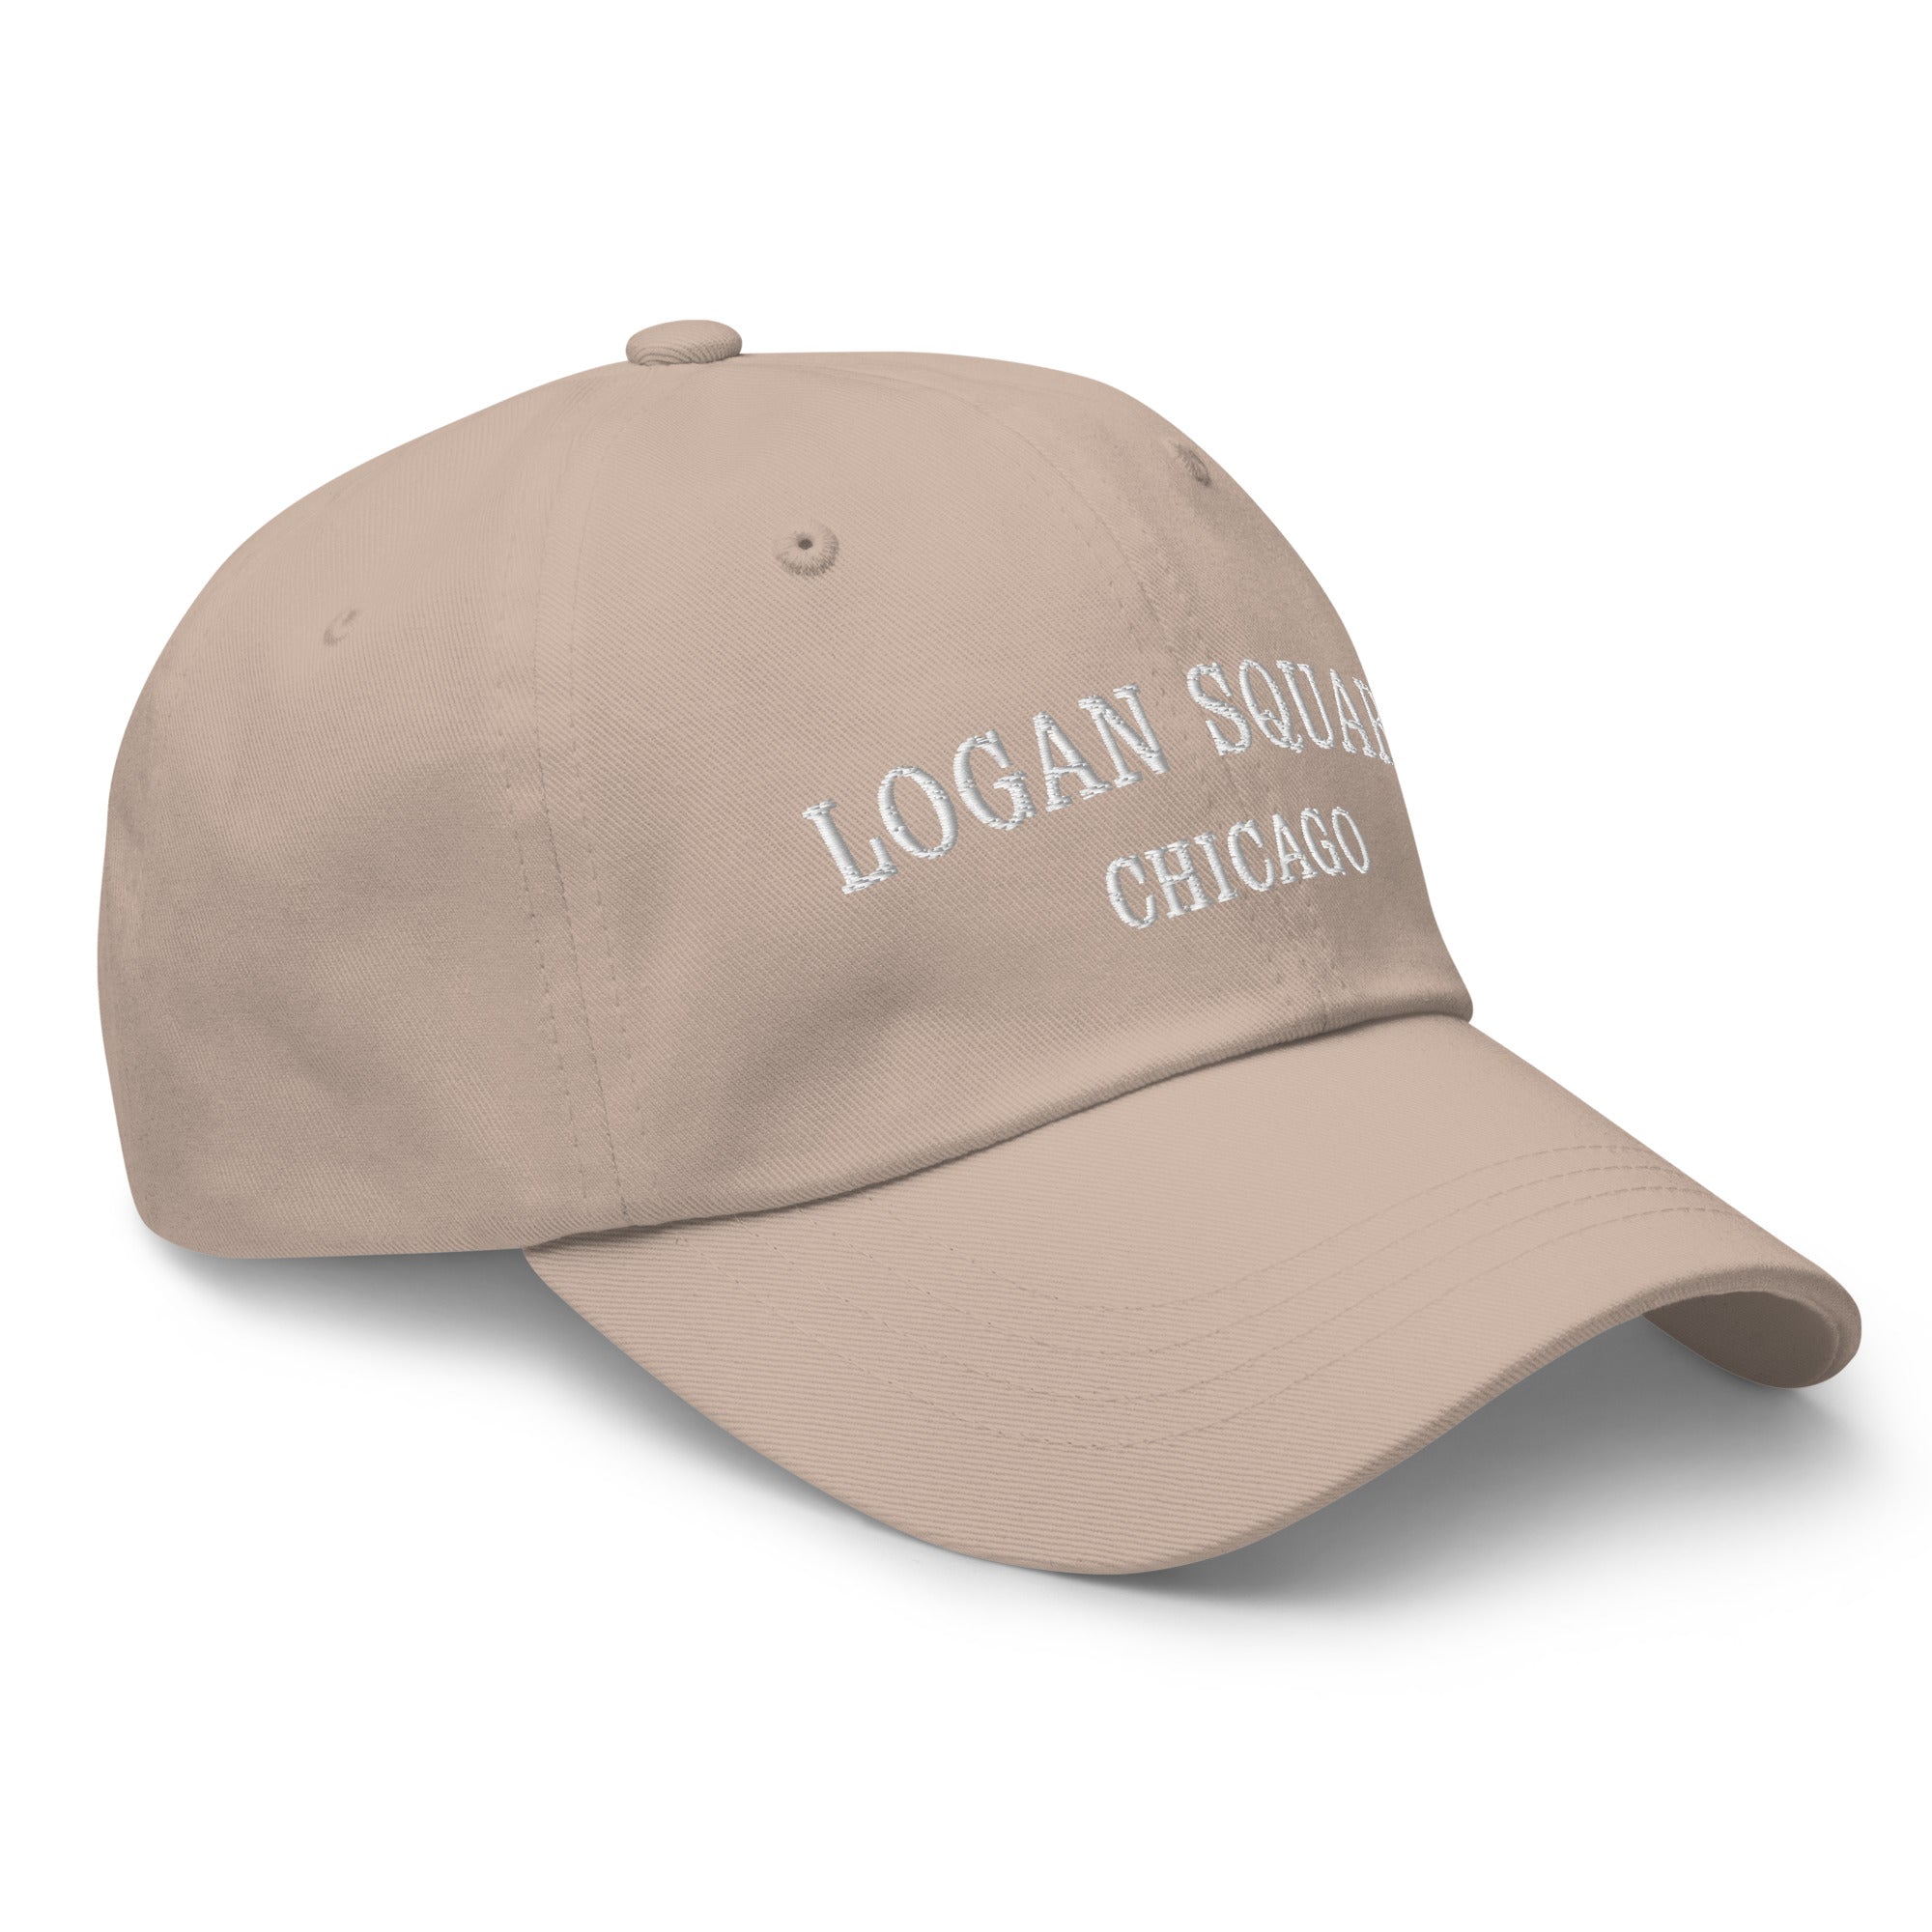 Logan Square Chicago Dad Hat - White Stitching